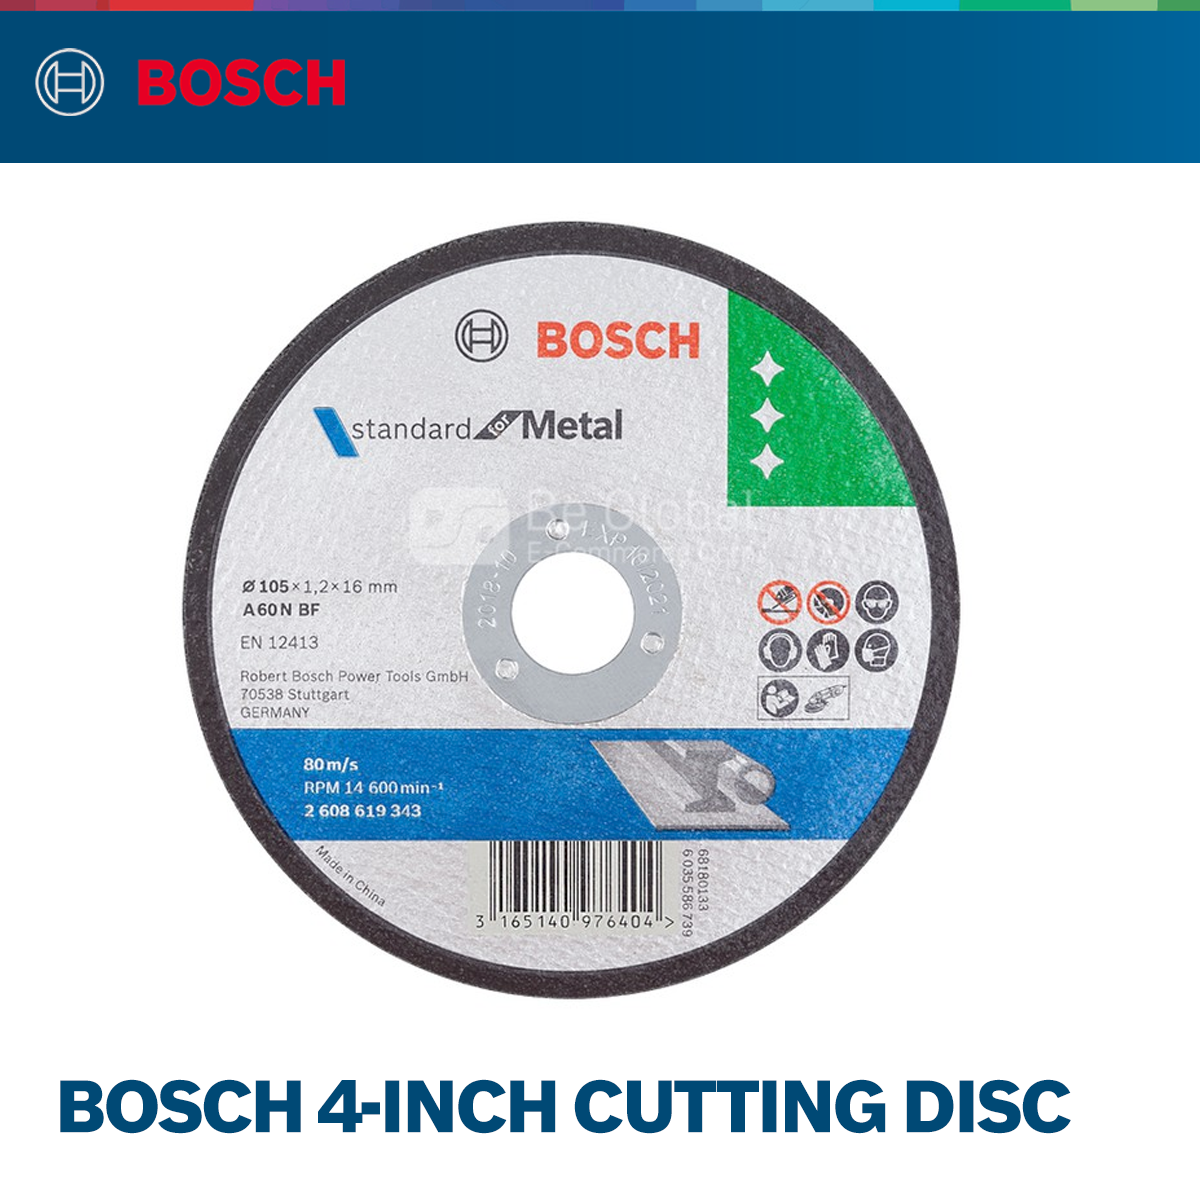 Bosch 4-inch Cutting Disc